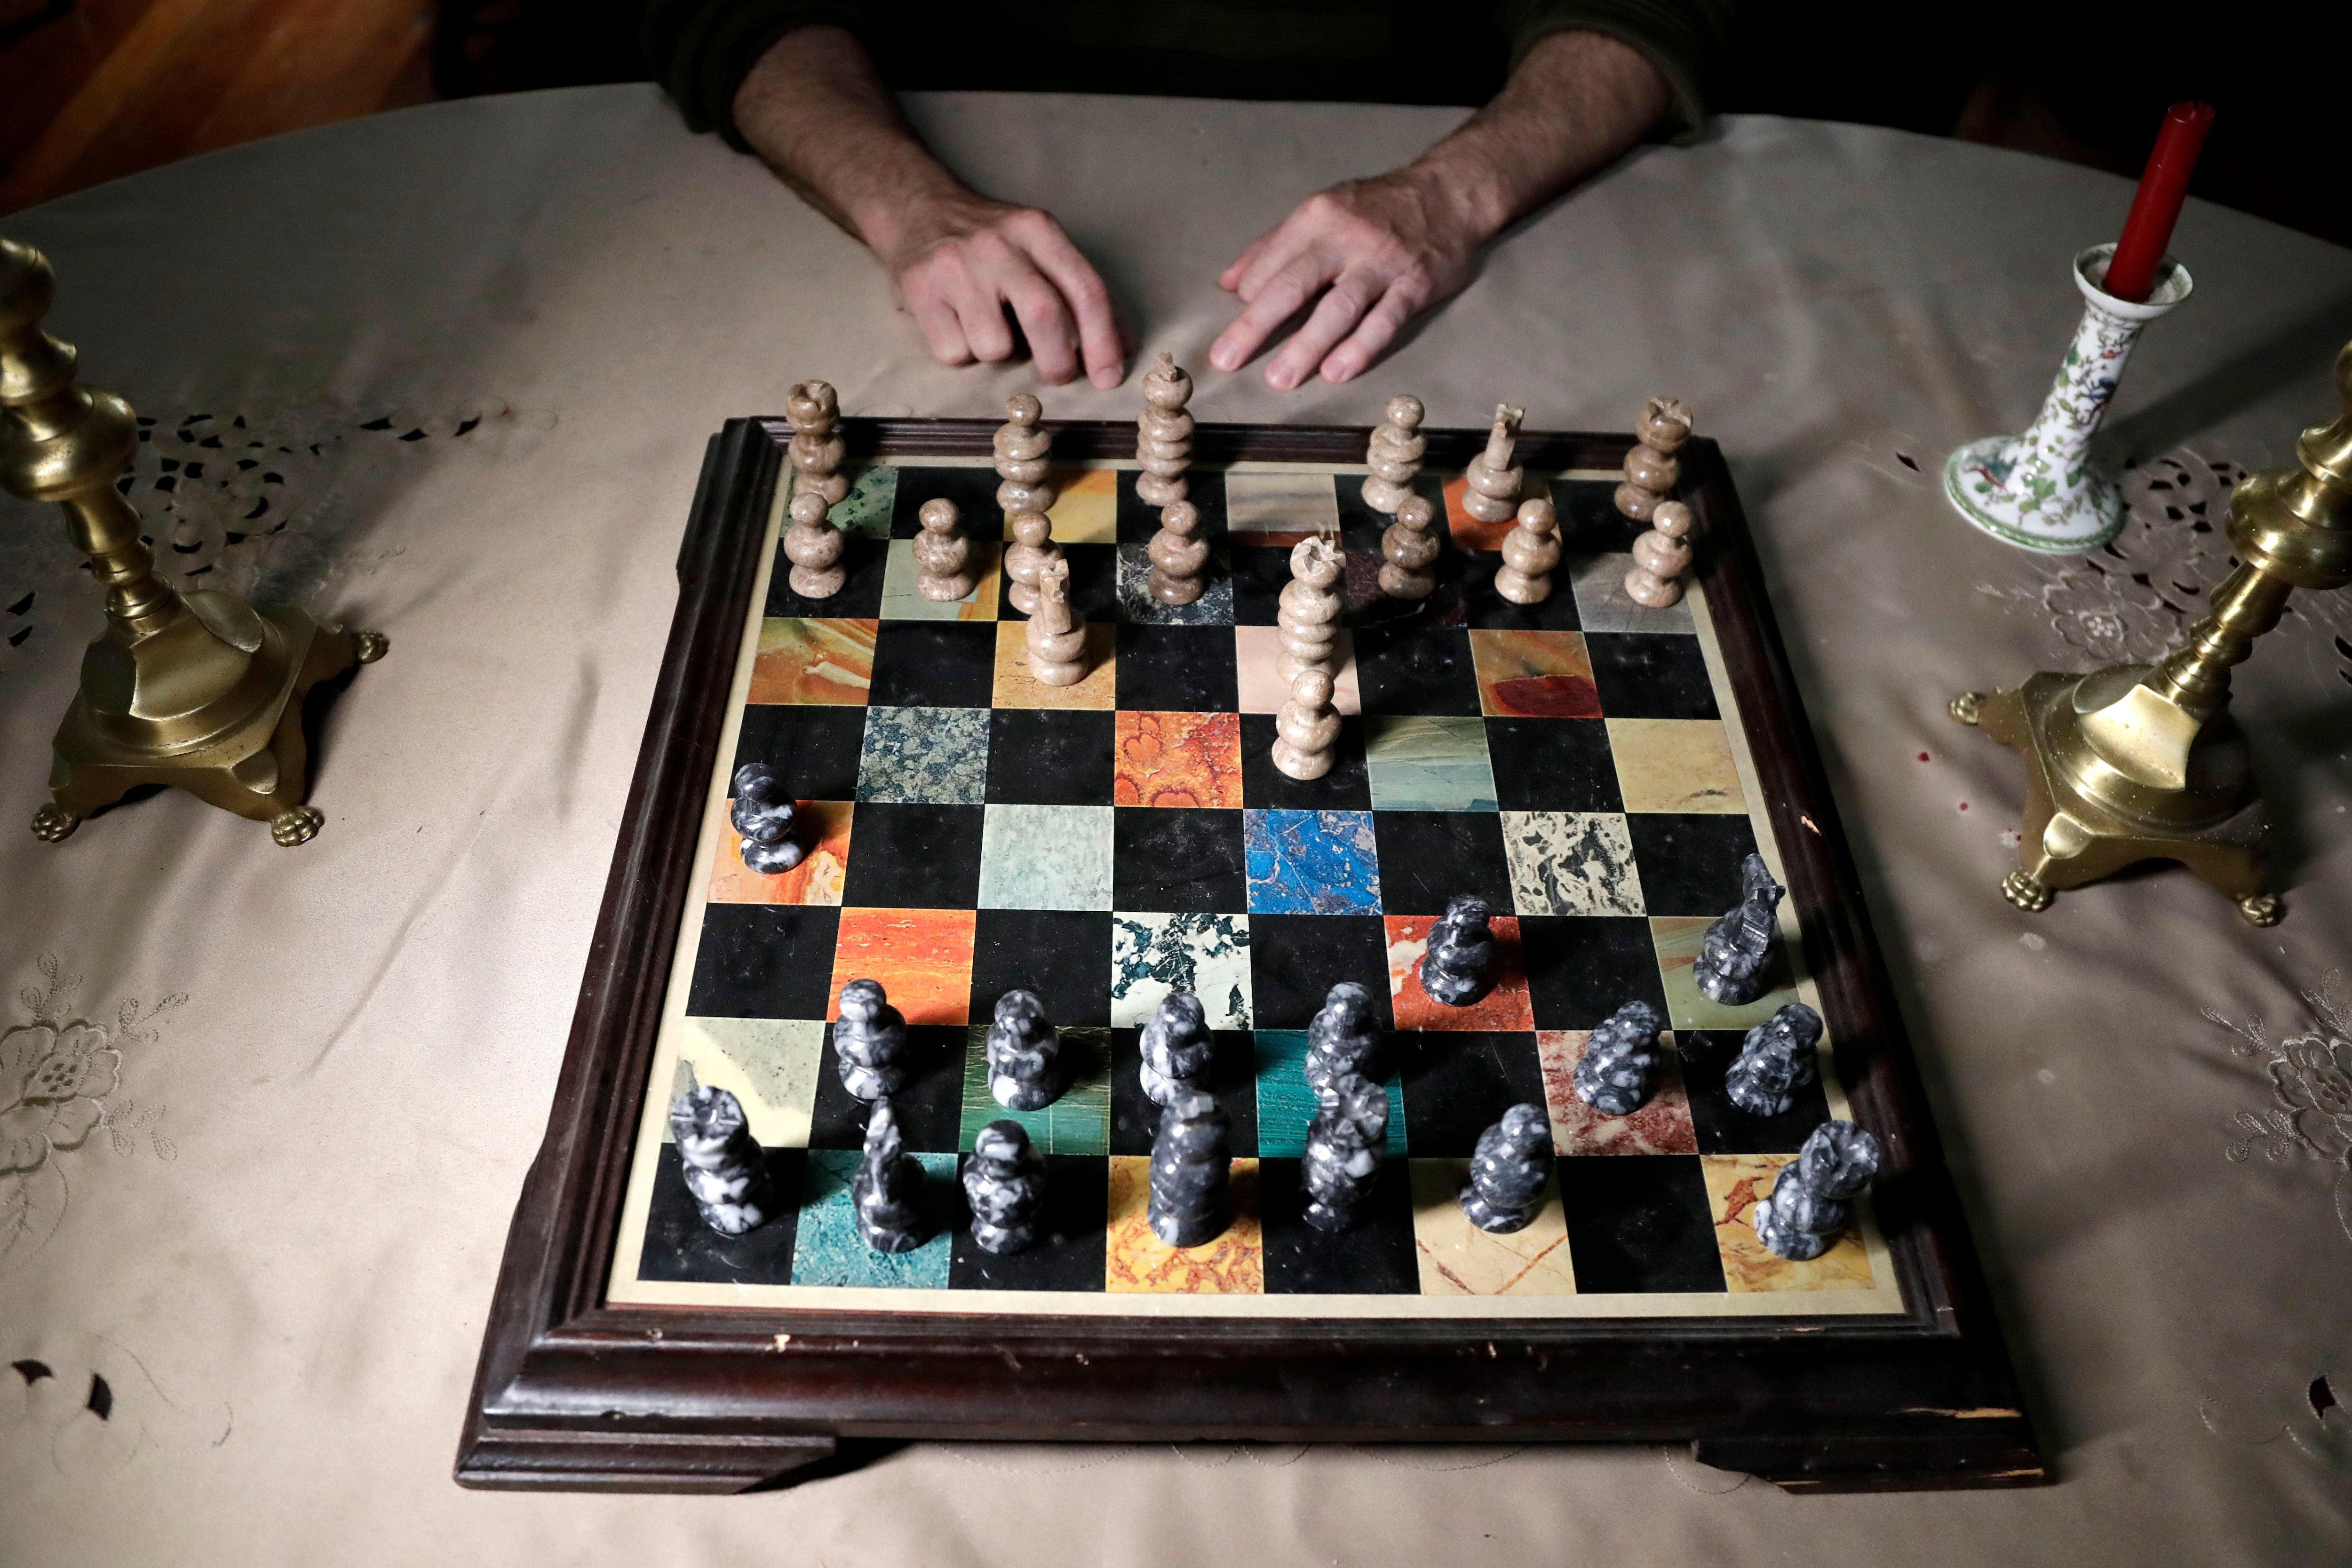 New in Chess Invincibility List